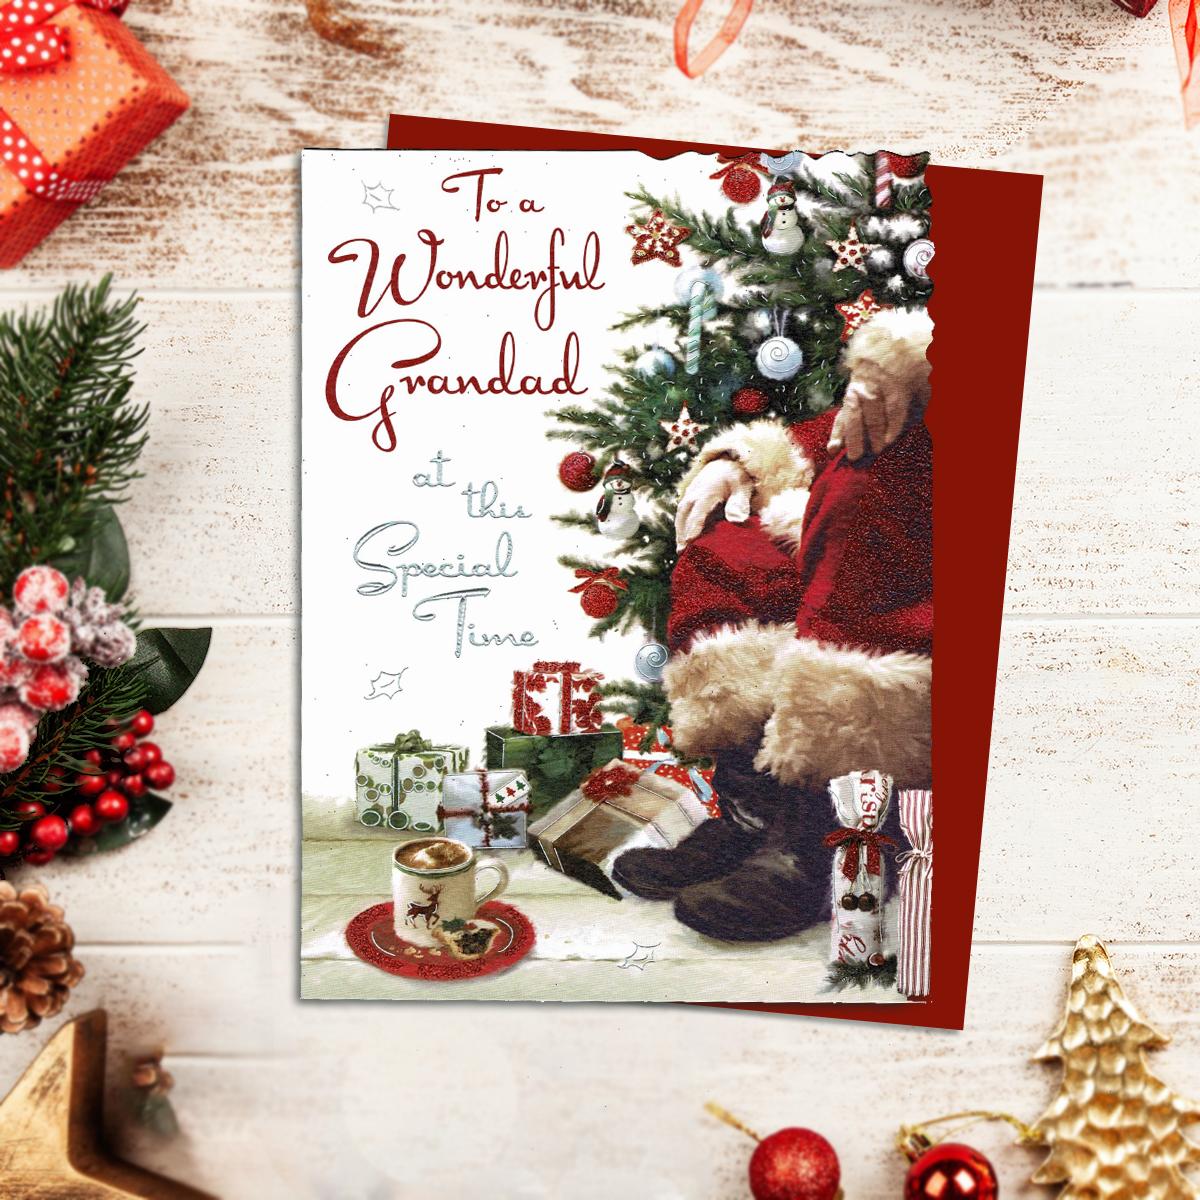 Wonderful Grandad Christmas Card Alongside Its Red Envelope